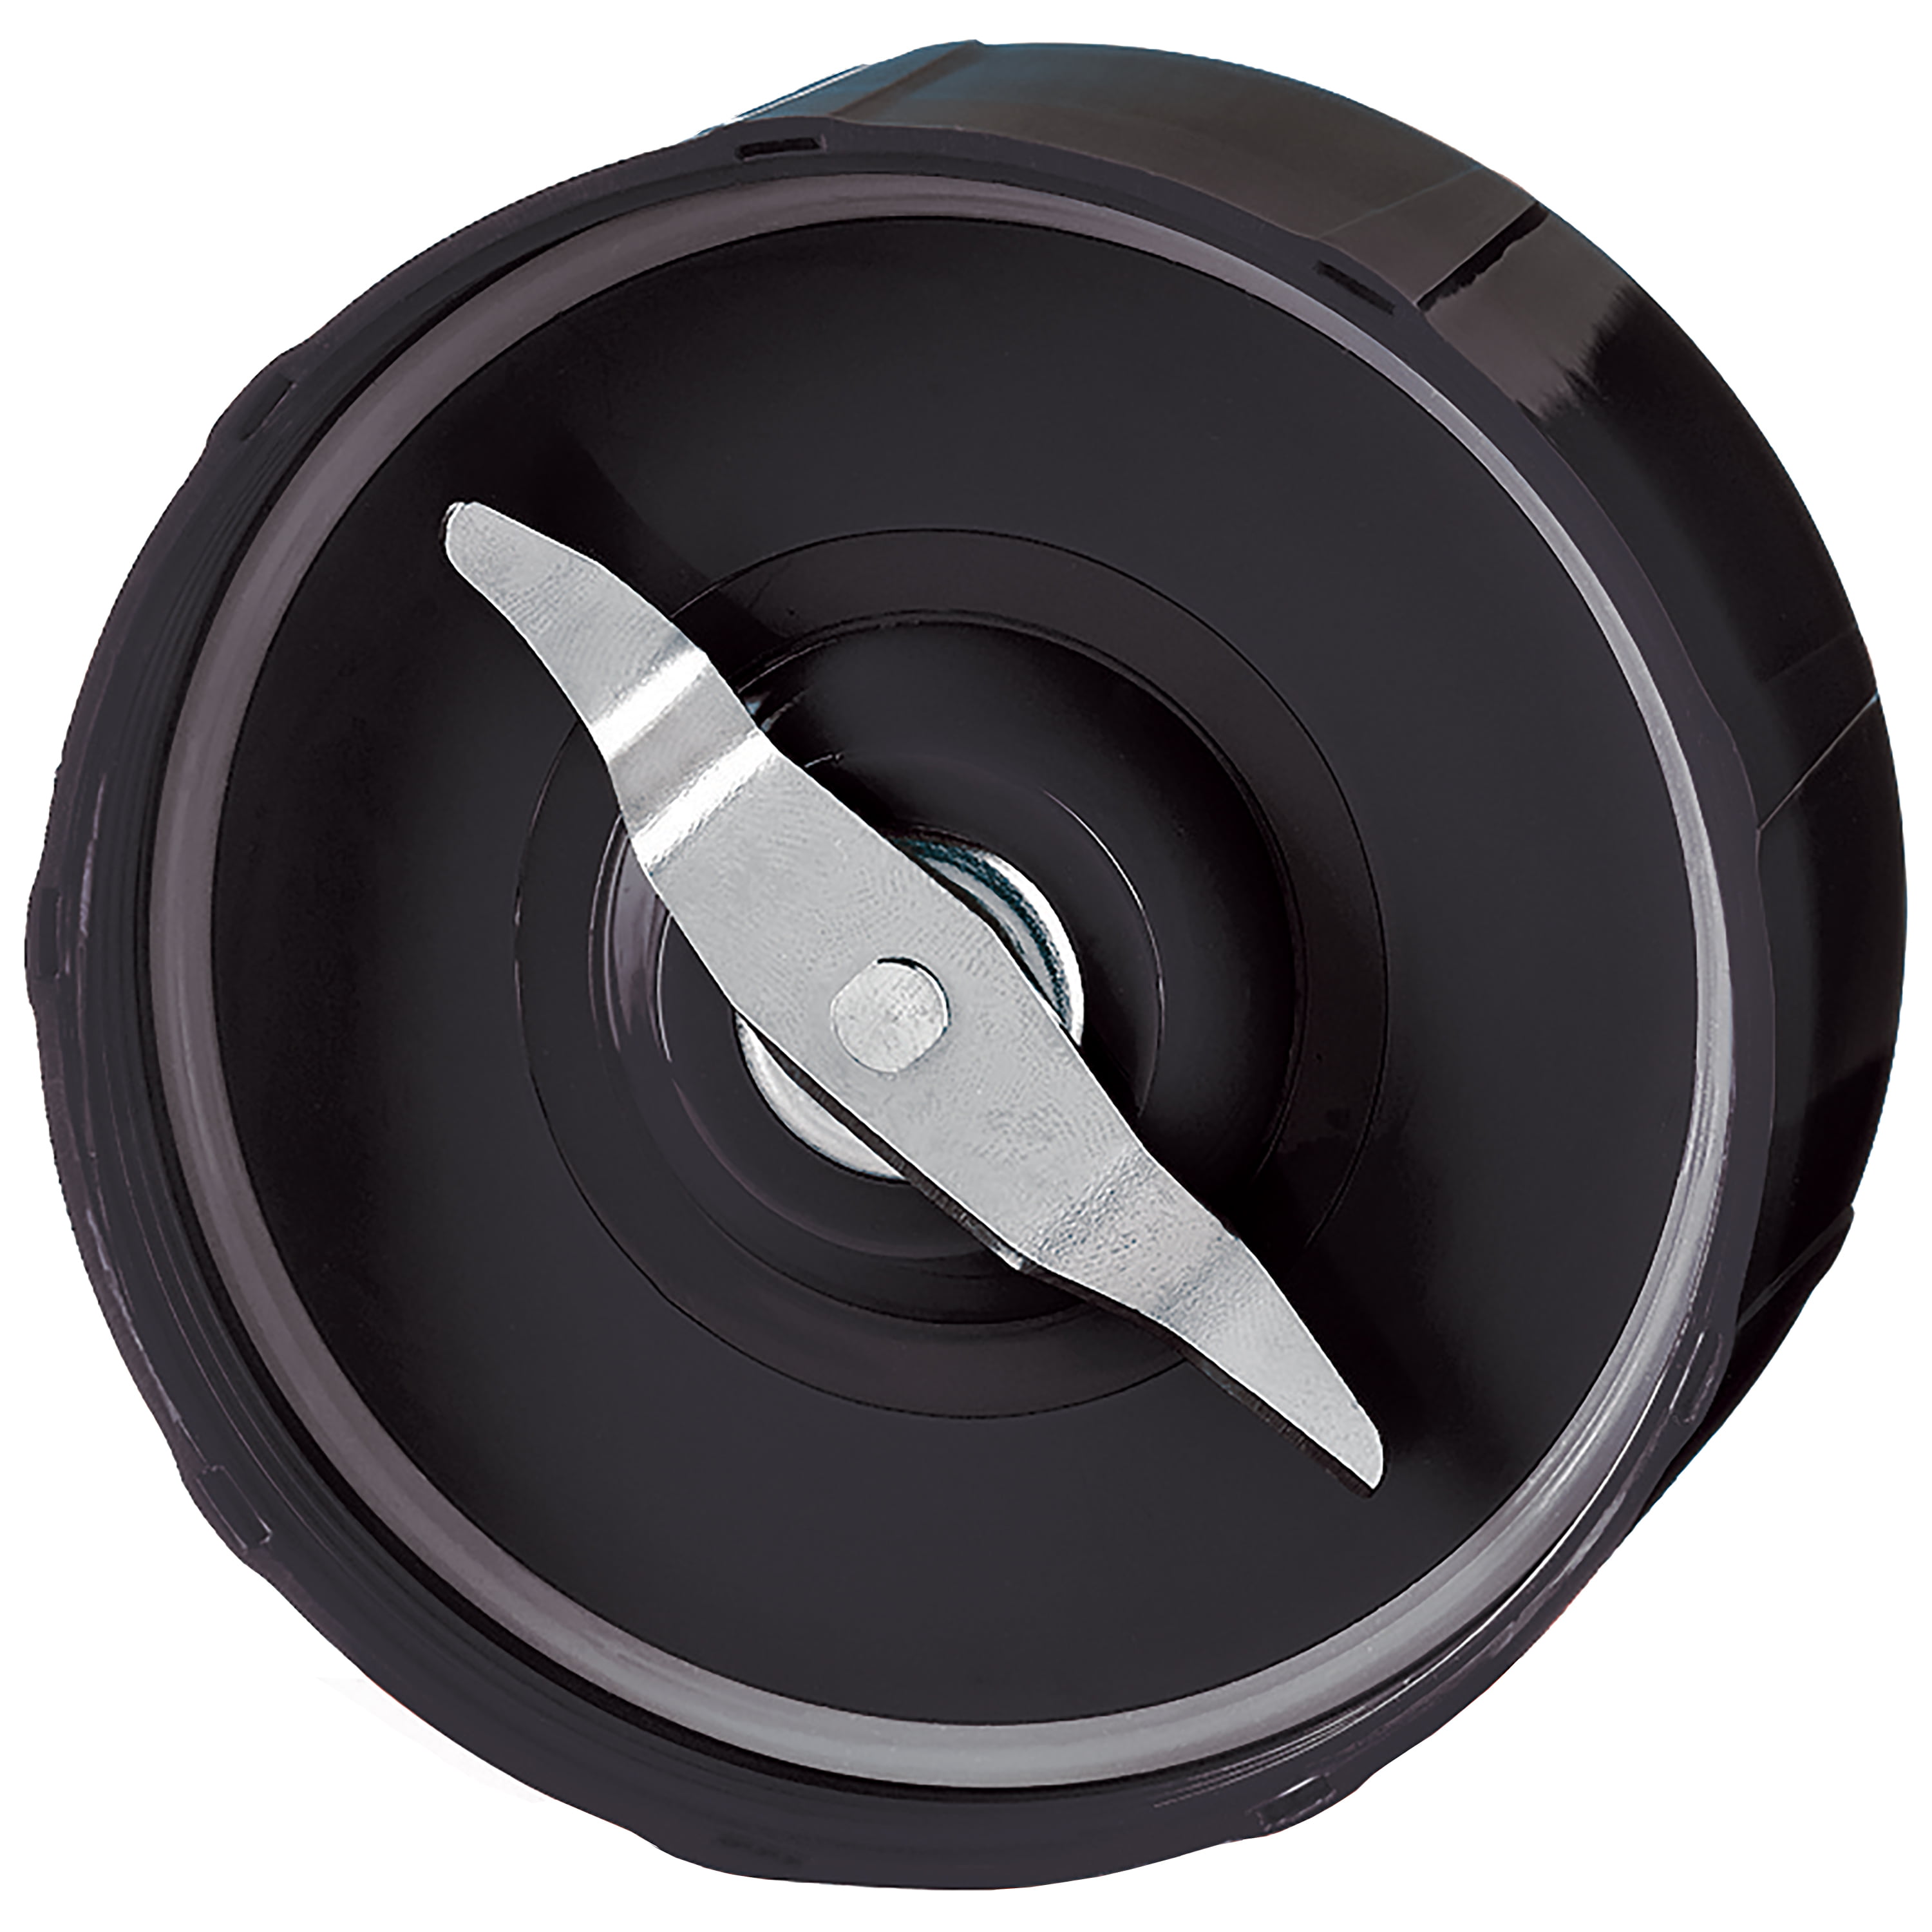 BELLA Rocket 12-Piece Personal Blender & Accessories Set $14.99 (Retail  $42.99)